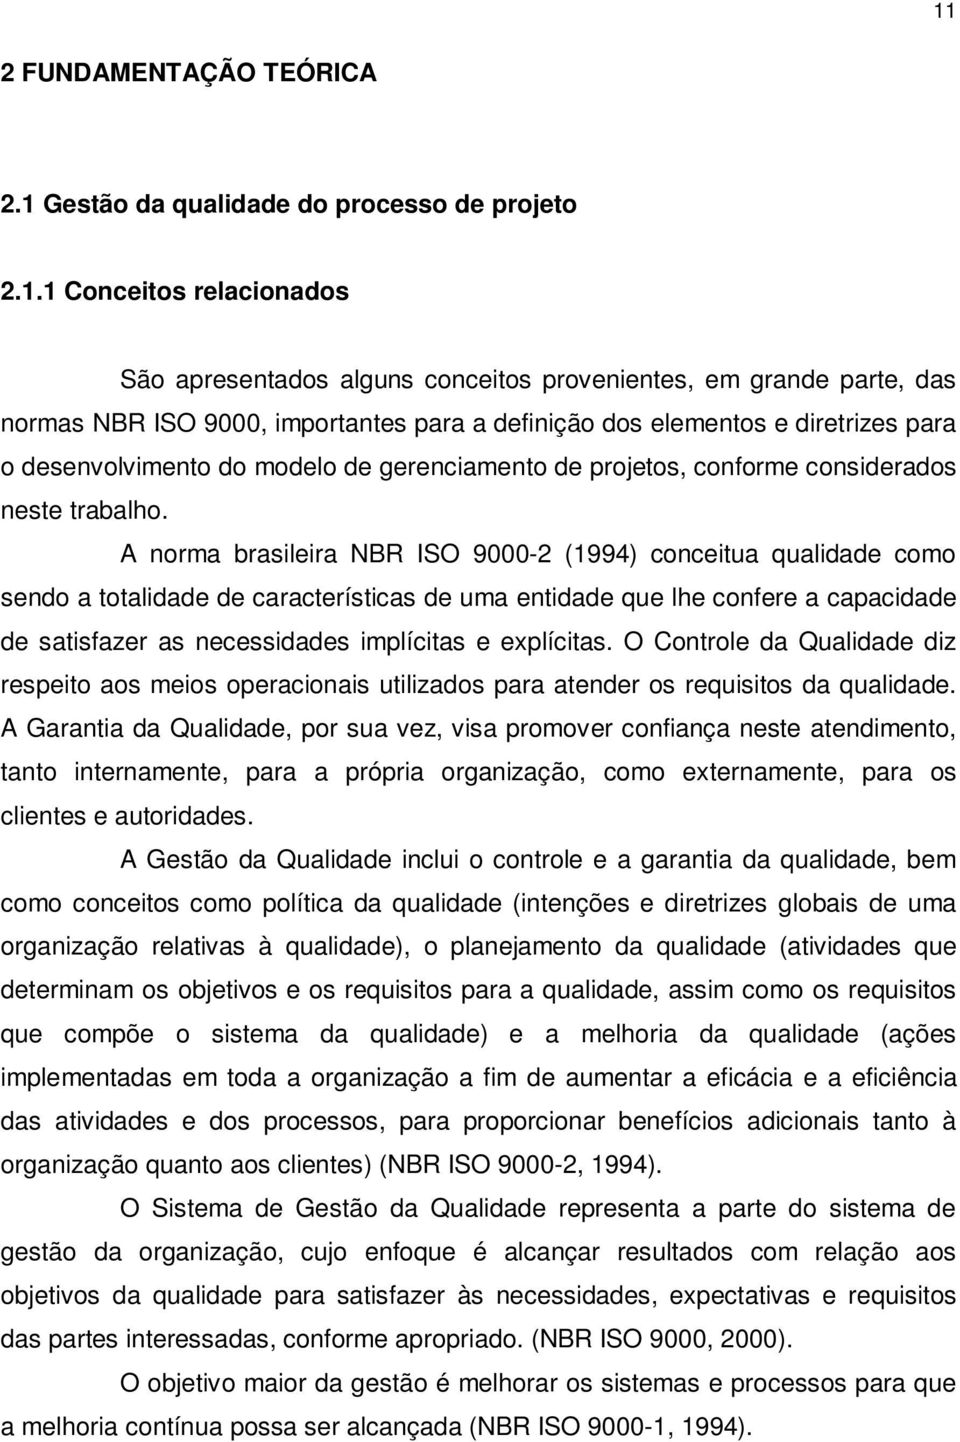 A norma brasileira NBR ISO 9000-2 (1994) conceitua qualidade como sendo a totalidade de características de uma entidade que lhe confere a capacidade de satisfazer as necessidades implícitas e